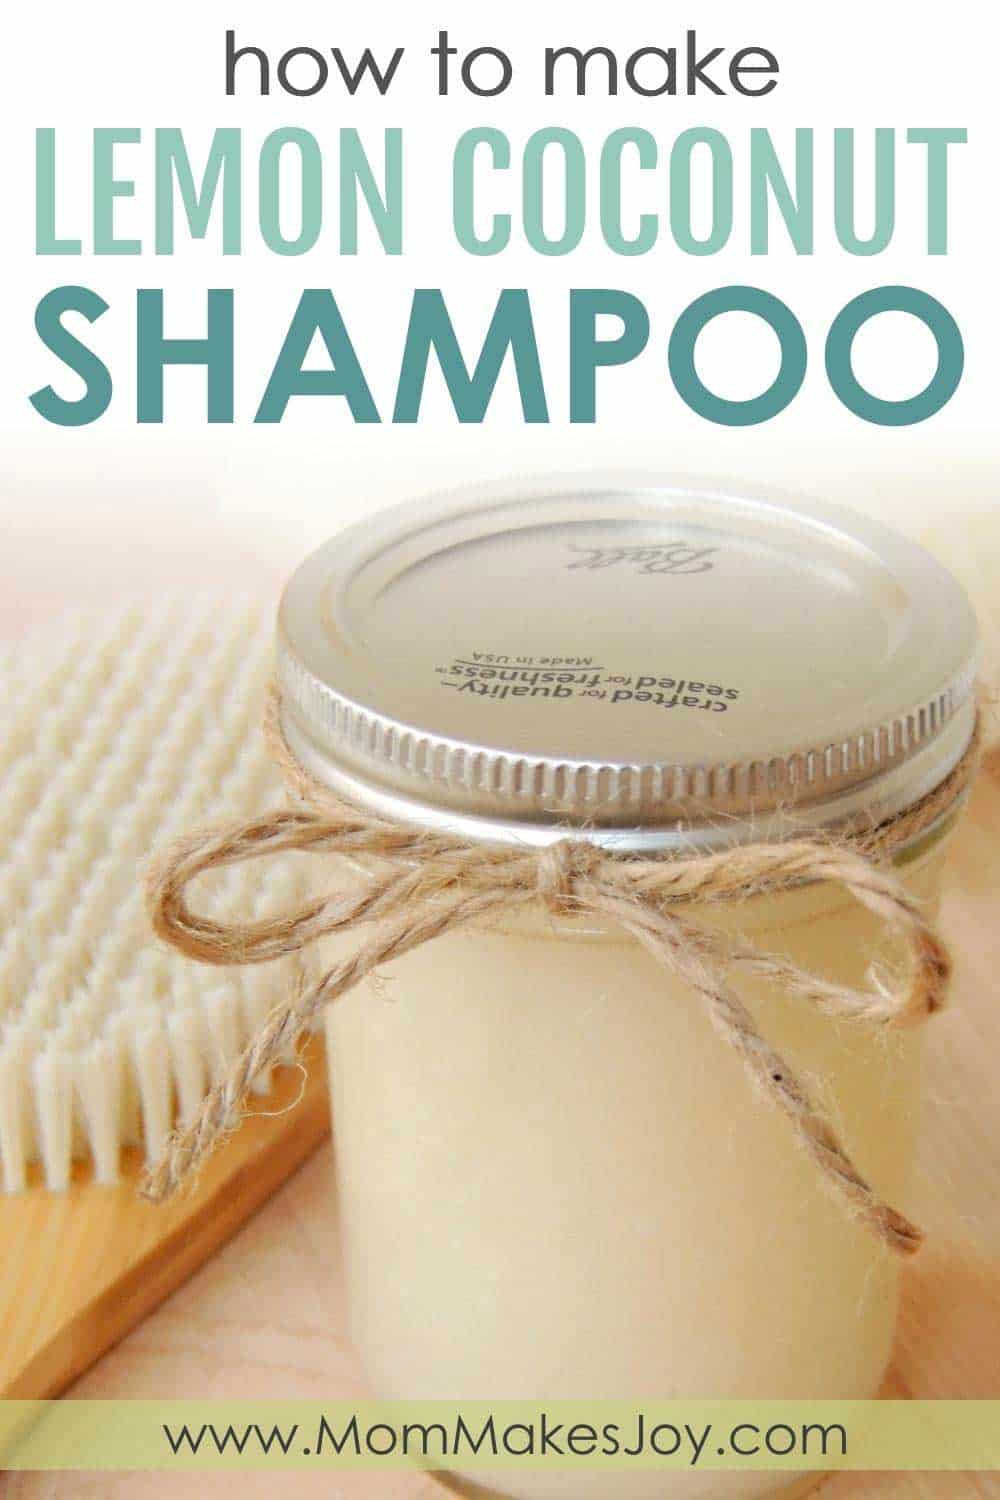 How to make organic lemon coconut shampoo